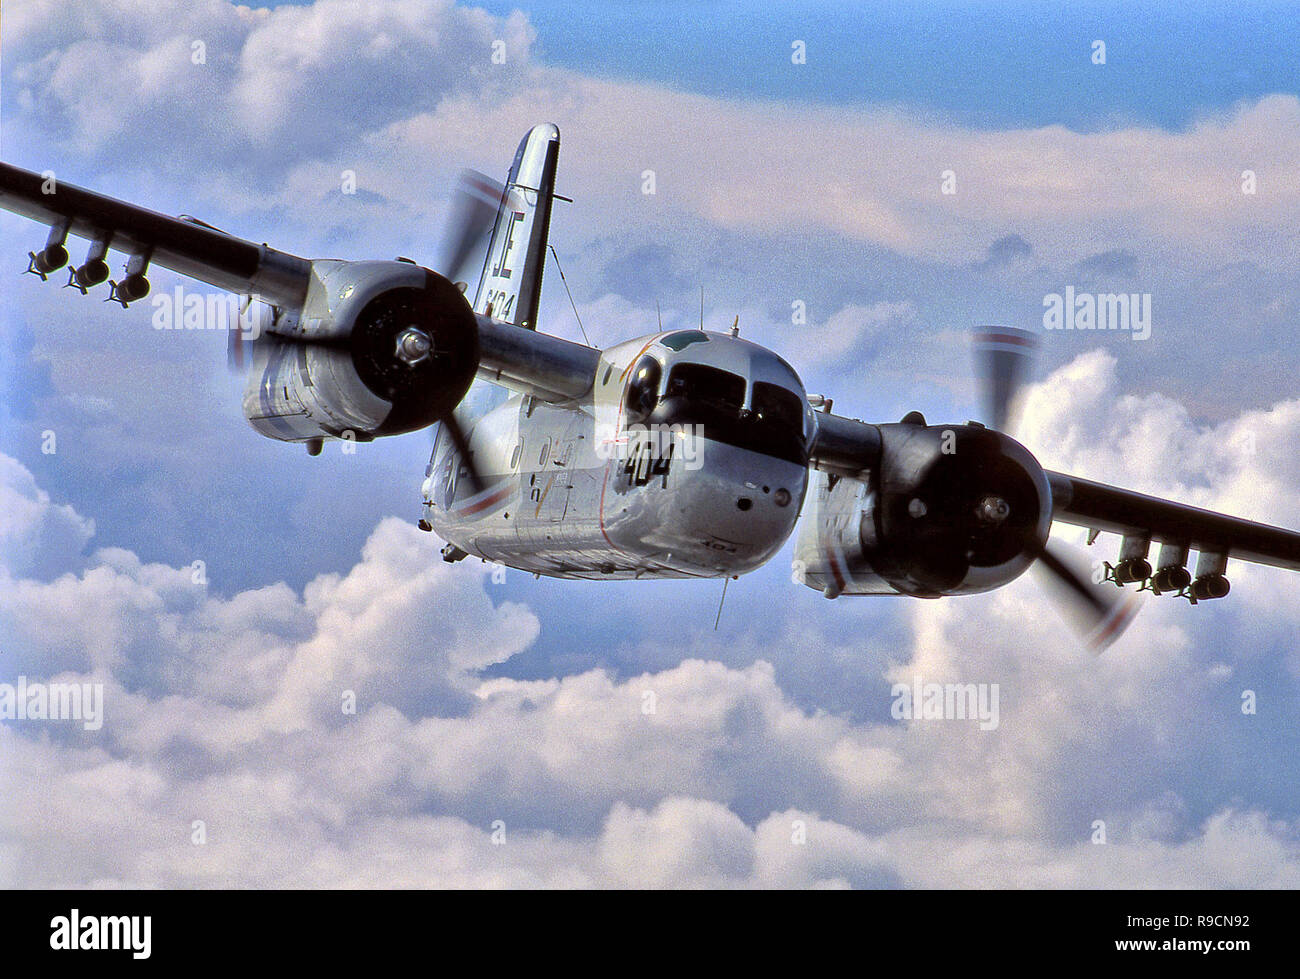 Grumman S-2 Tracker Anti-Submarine Warfare Aircraft Stock Photo - Alamy